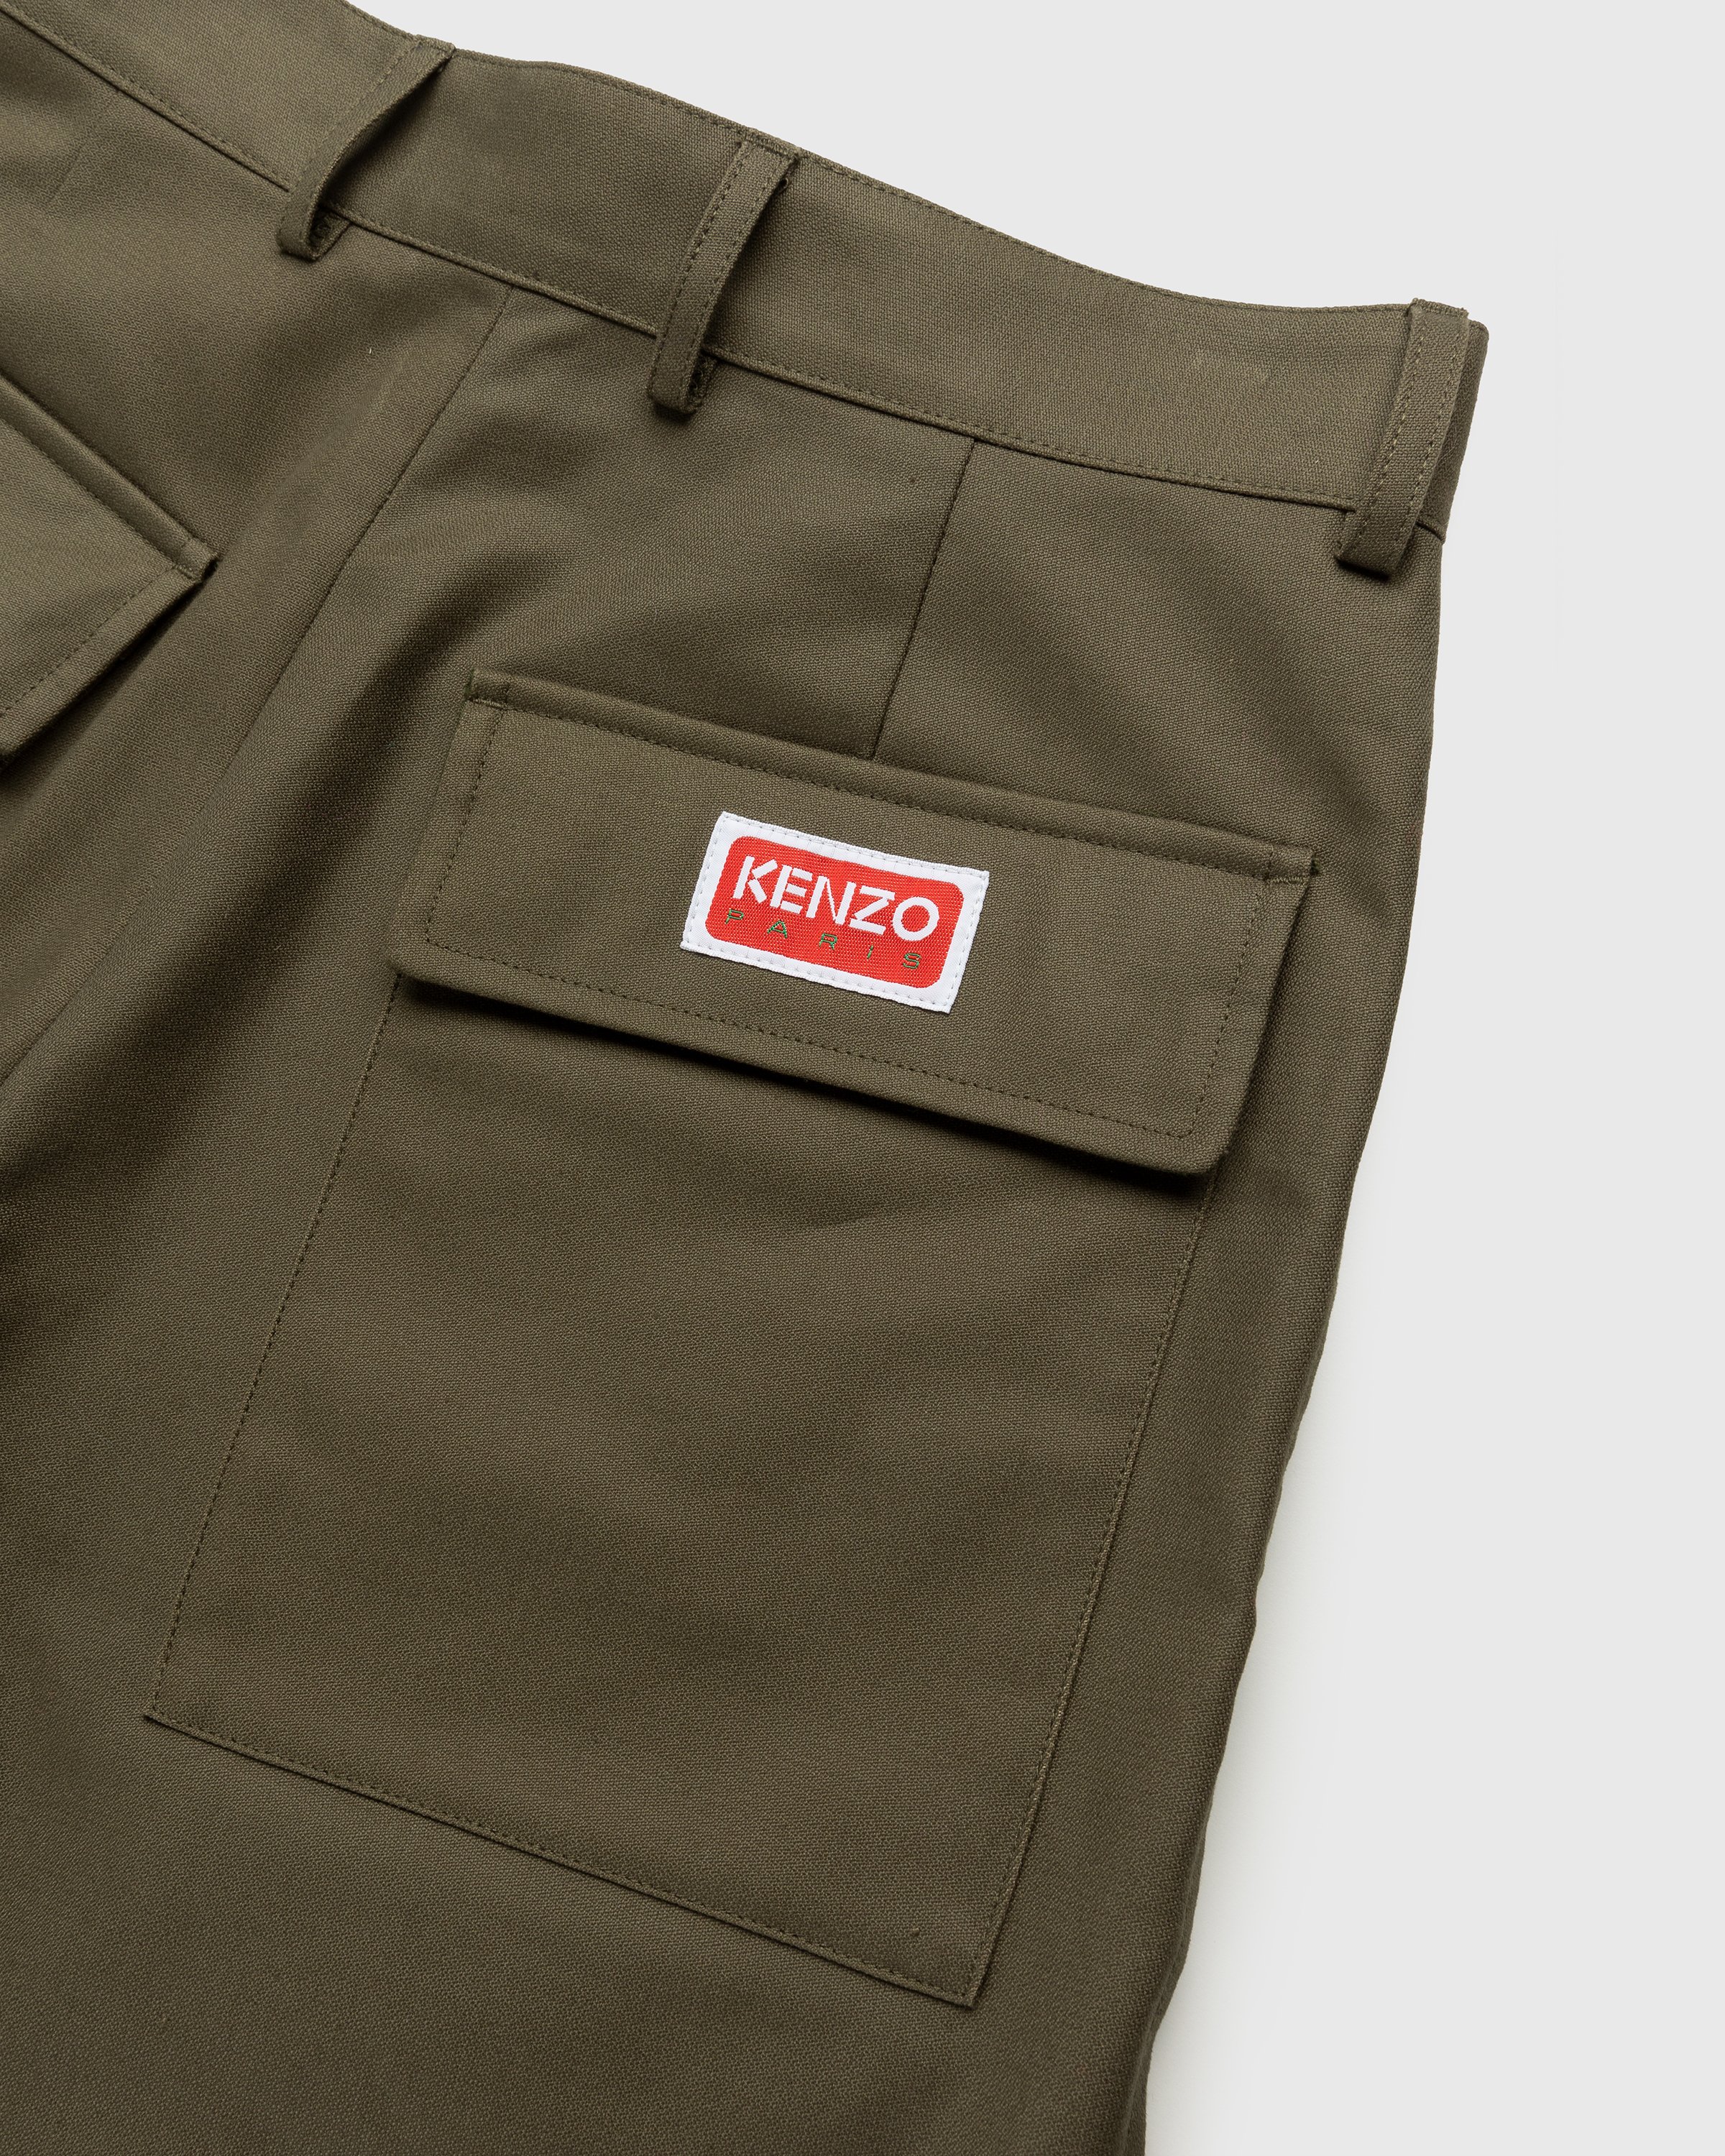 Kenzo - Tailored Pants Dark Khaki - Clothing - Green - Image 5